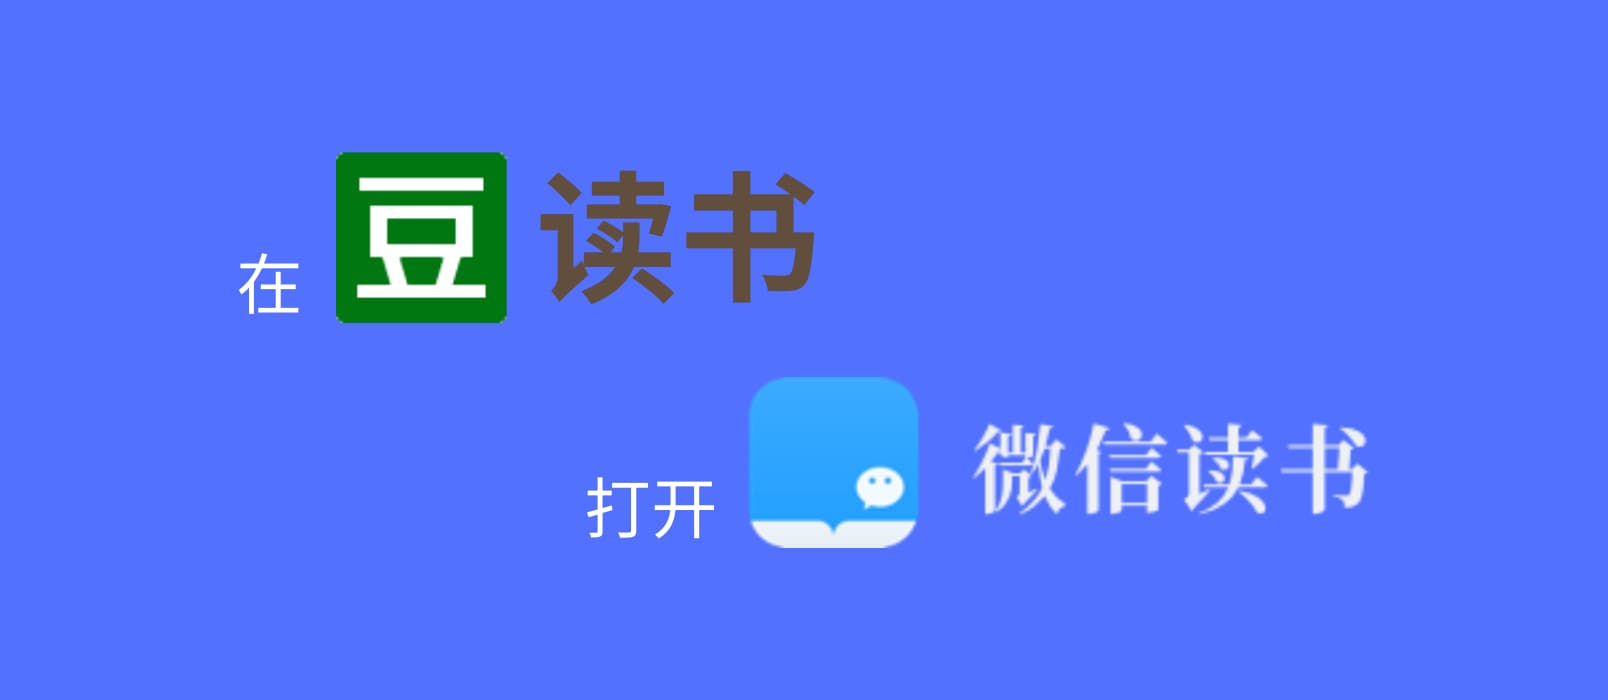 Weread on Douban - 在豆瓣读书页面添加微信读书入口[Chrome/Edge] 1